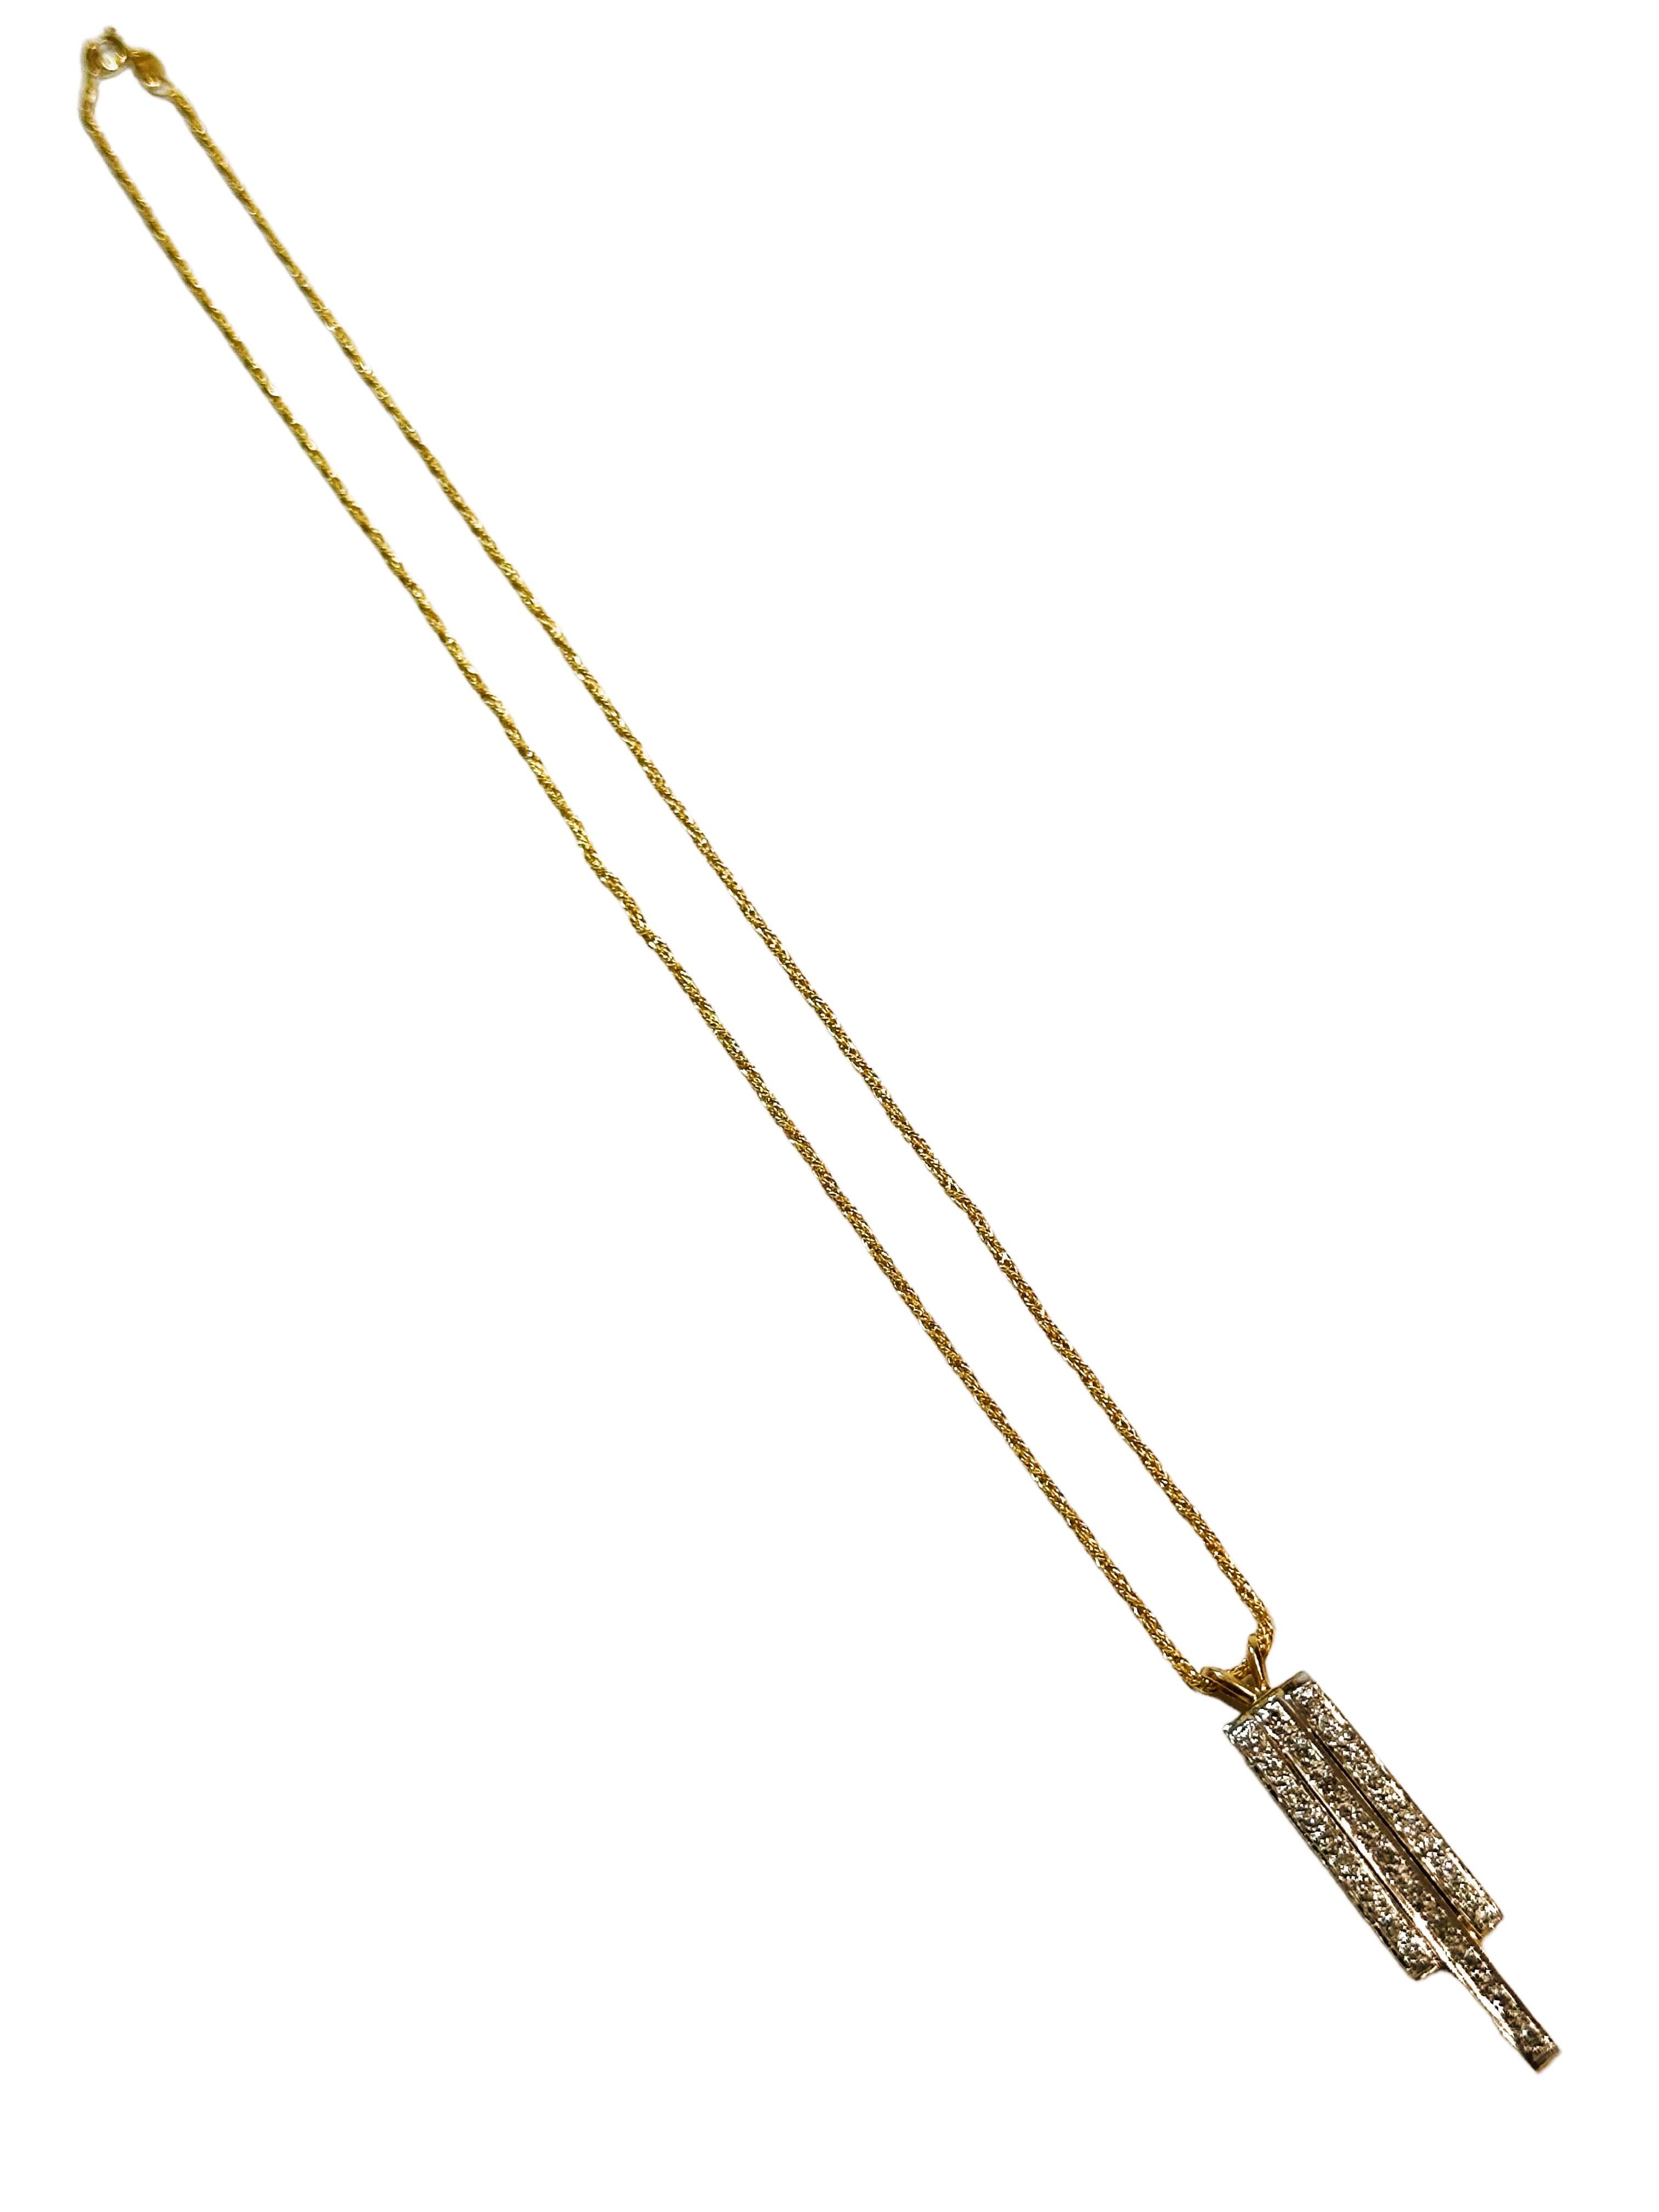 Art Deco Italian Modern 14k Two Tone Gold 1.25 ct Diamond Necklace with Appraisal